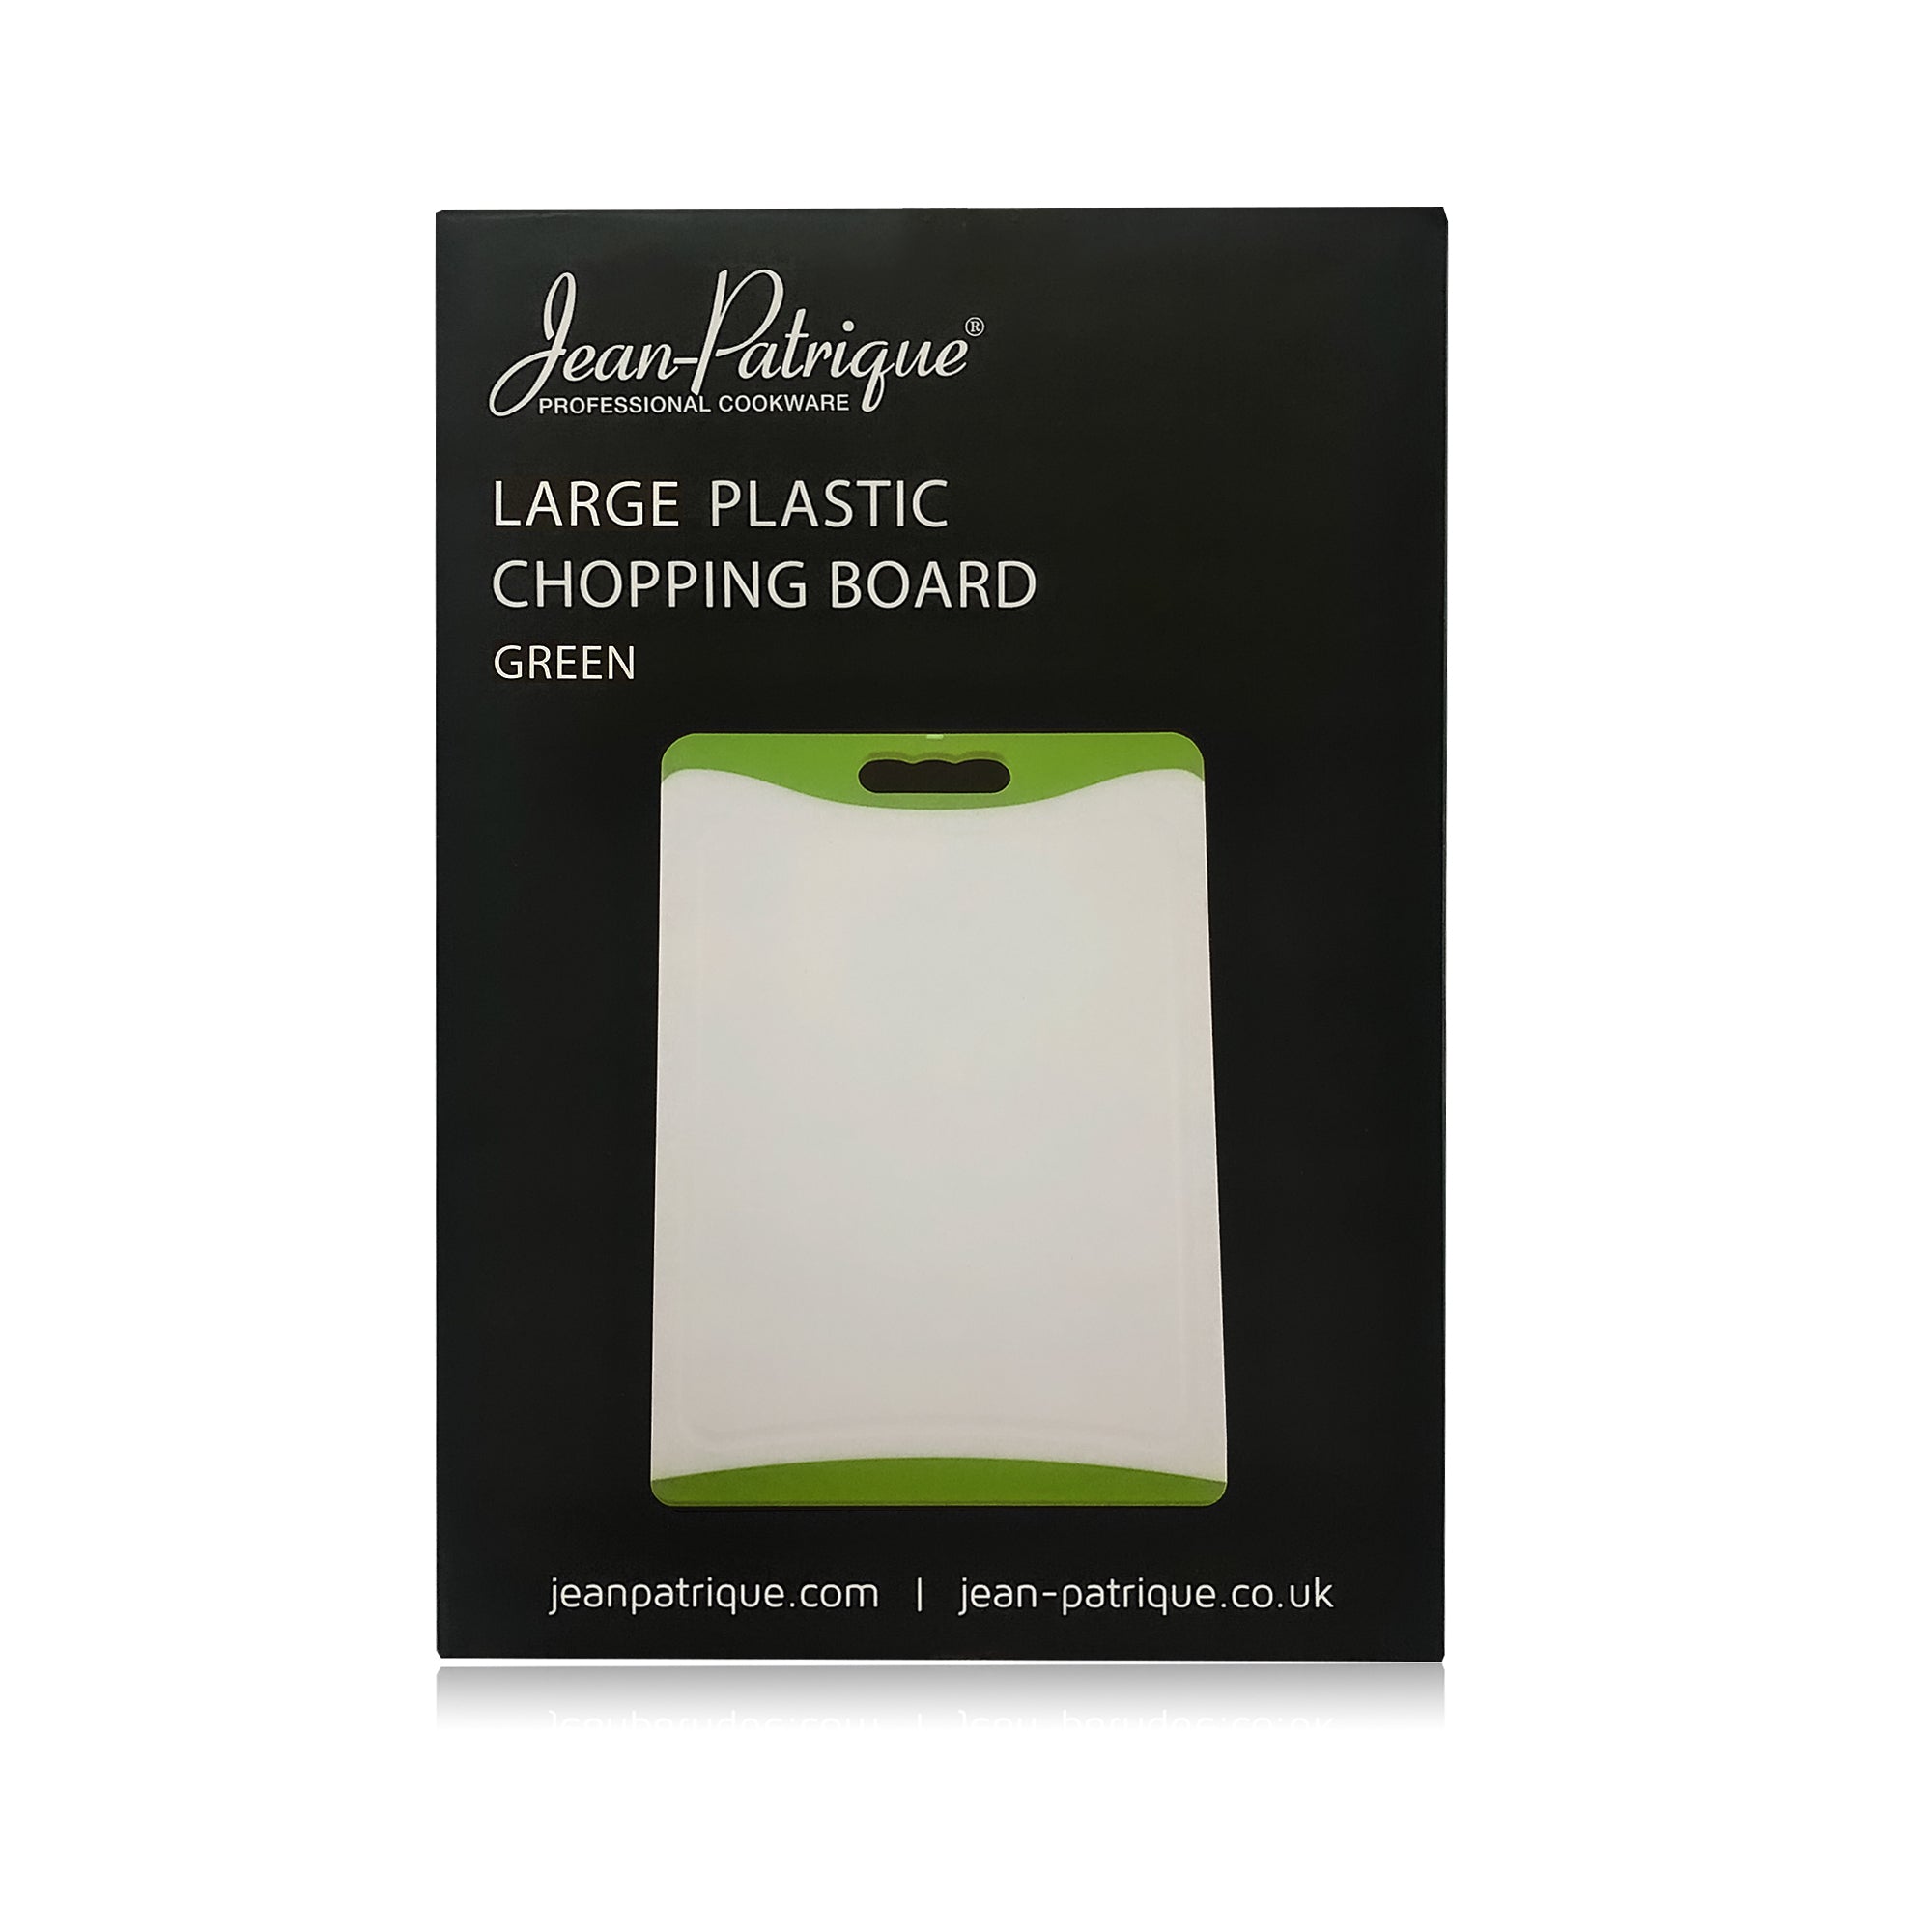 Large Plastic Chopping Board - Green 16.9 Inch